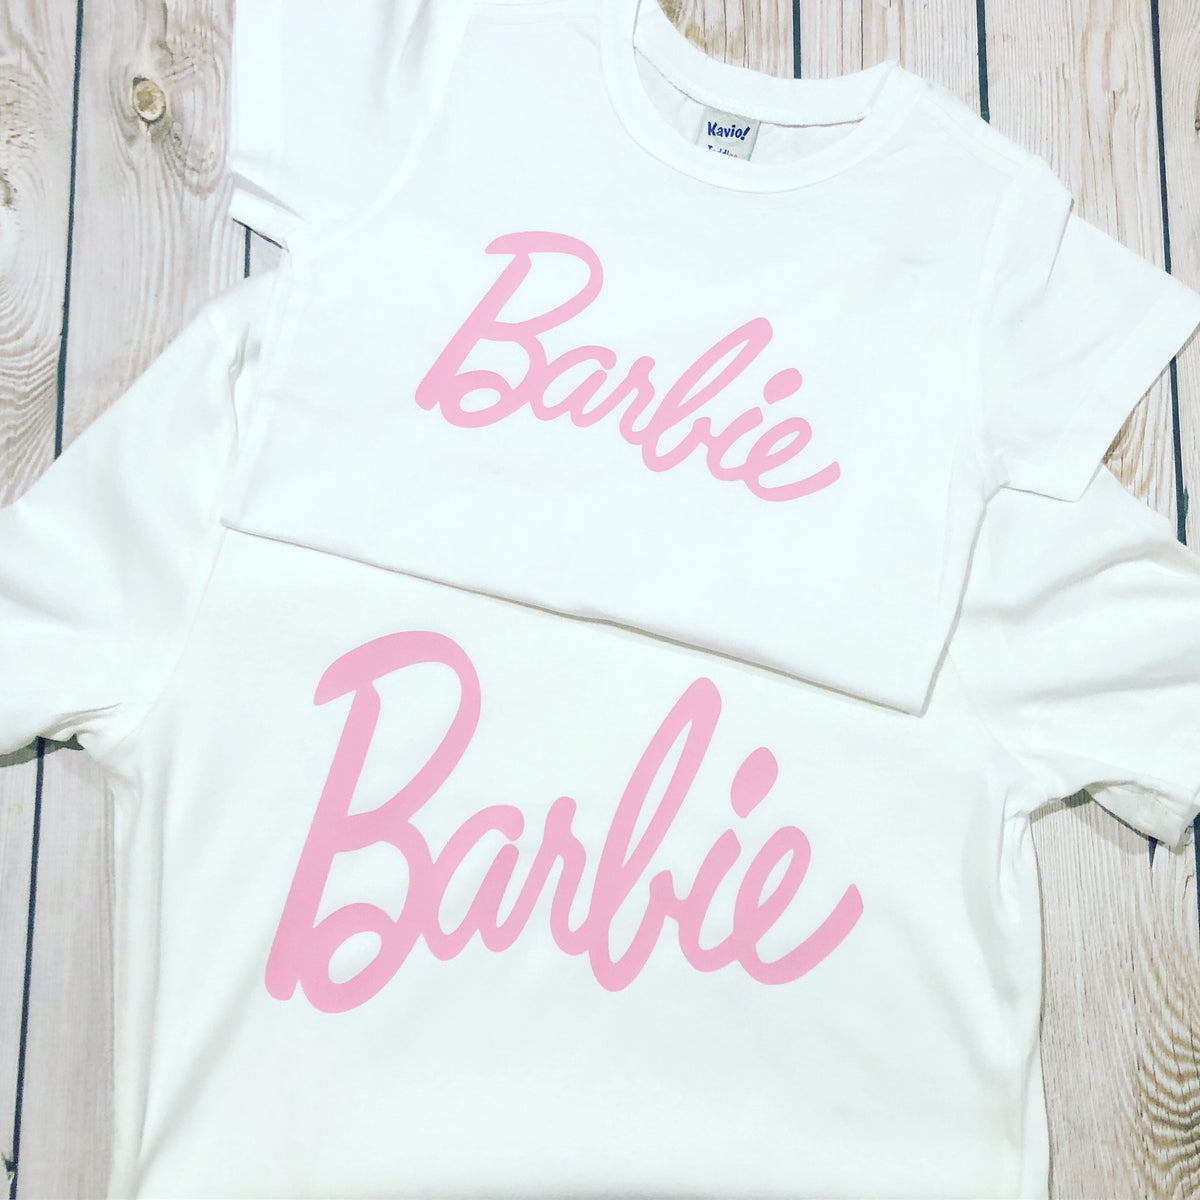 shirt that says barbie